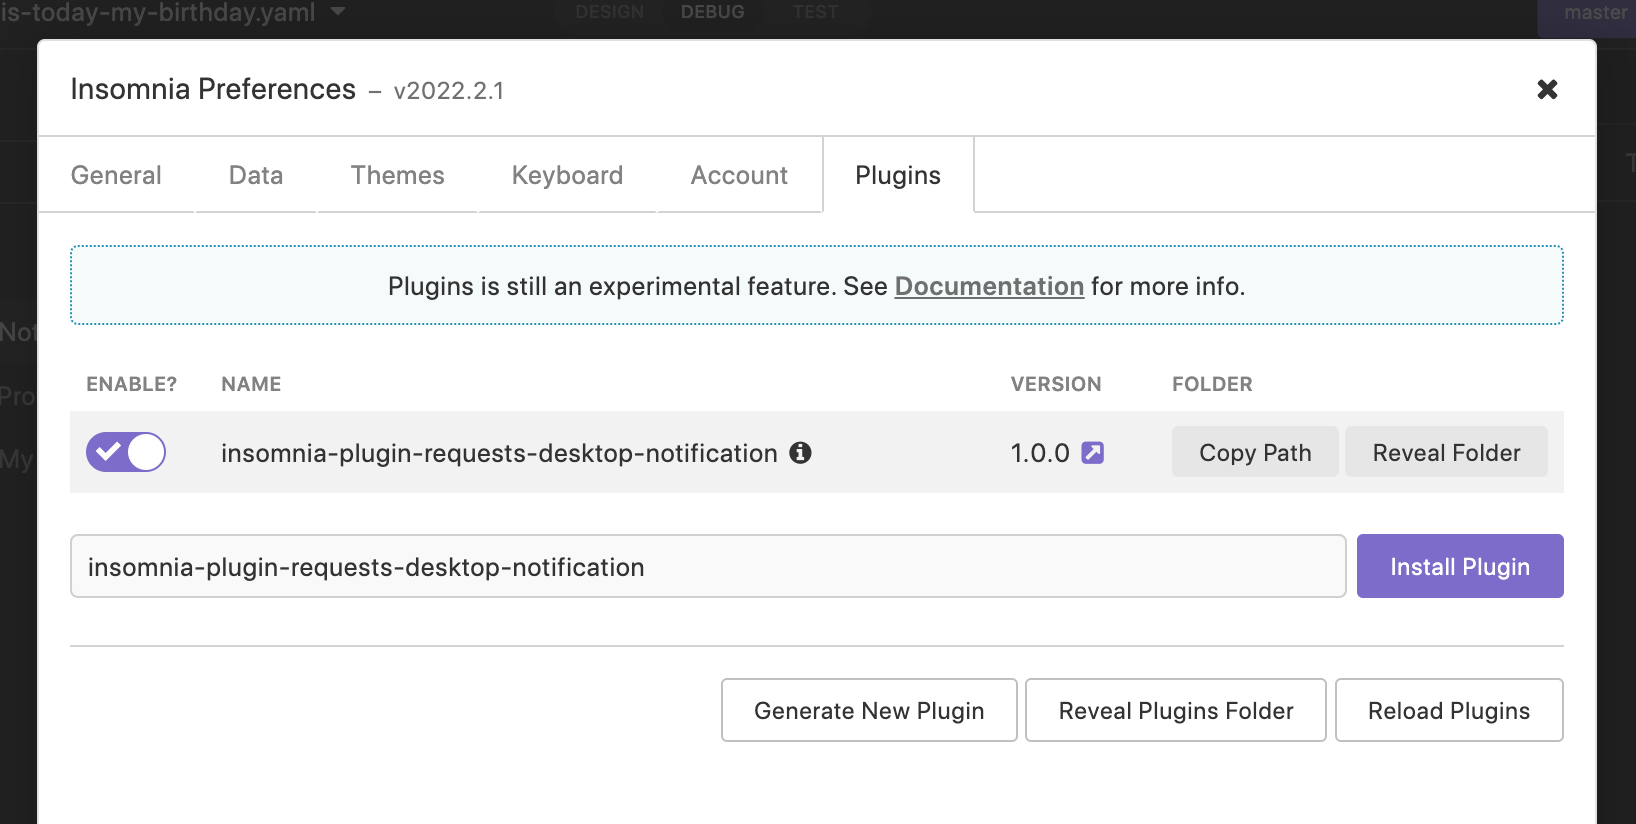 Installing the requests-desktop-notification plugin